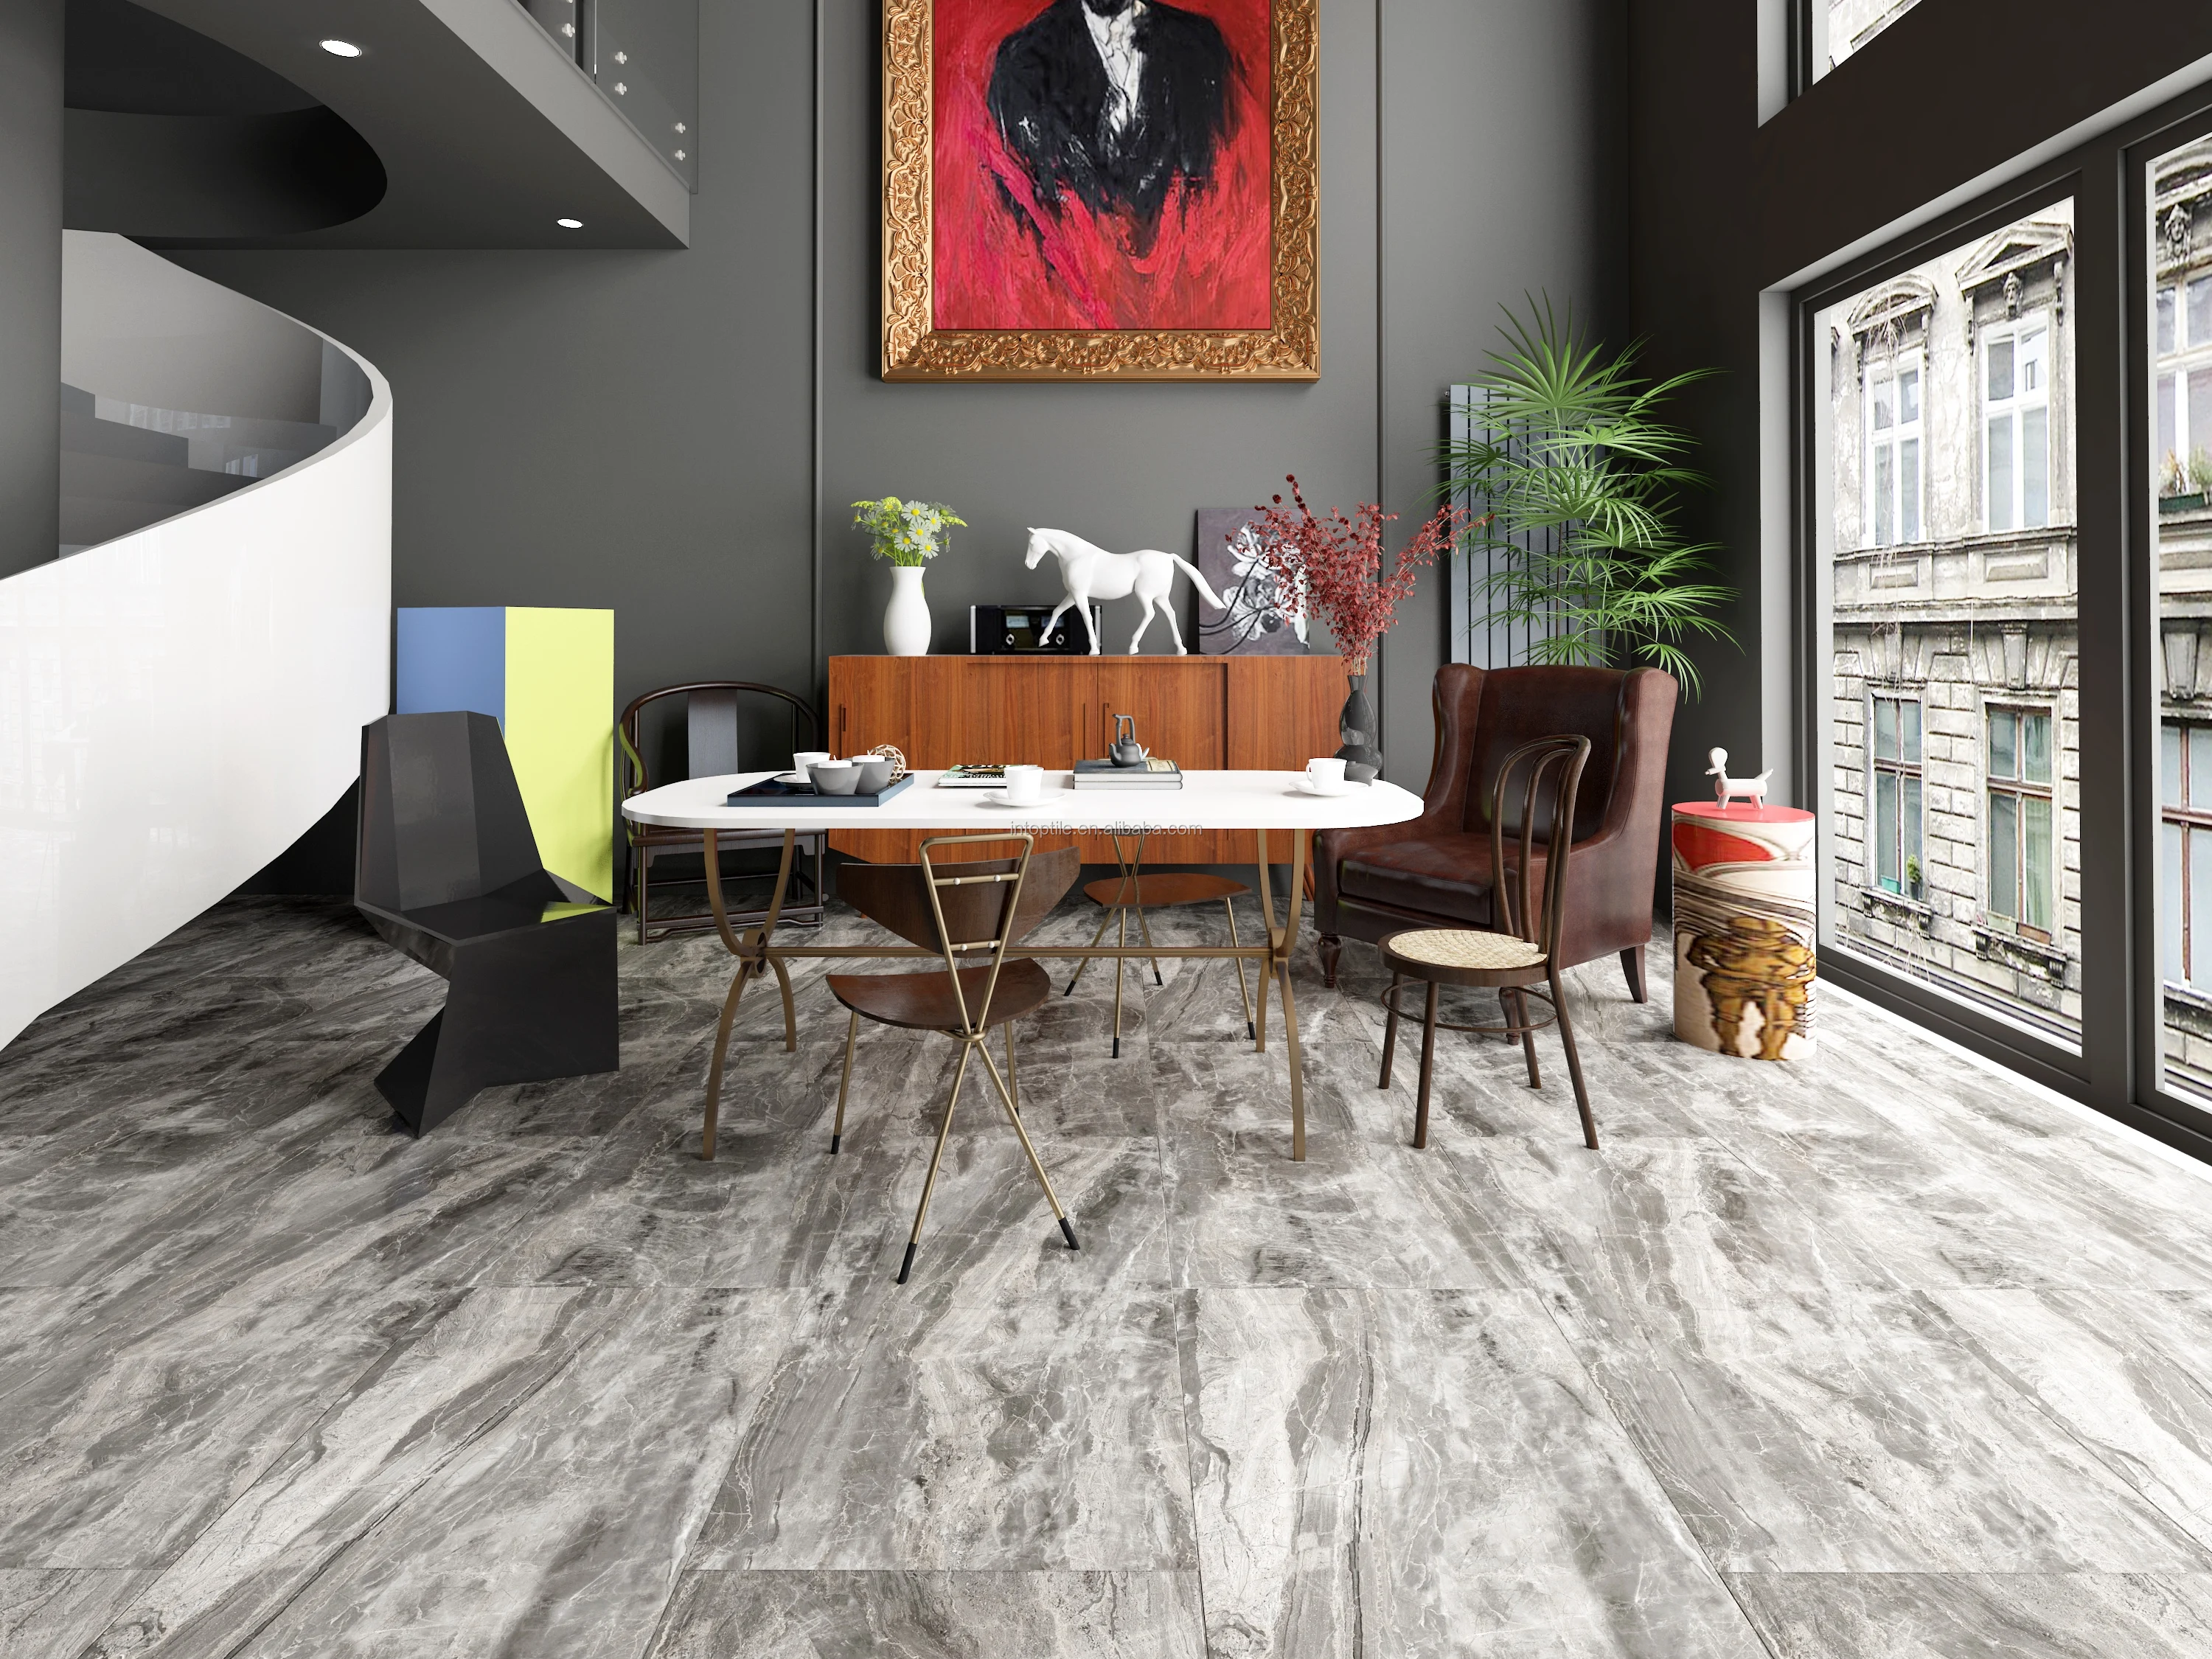 Hot Sell Marble Floor Tiles Polished 600x1200mm Buy Marbel Floor